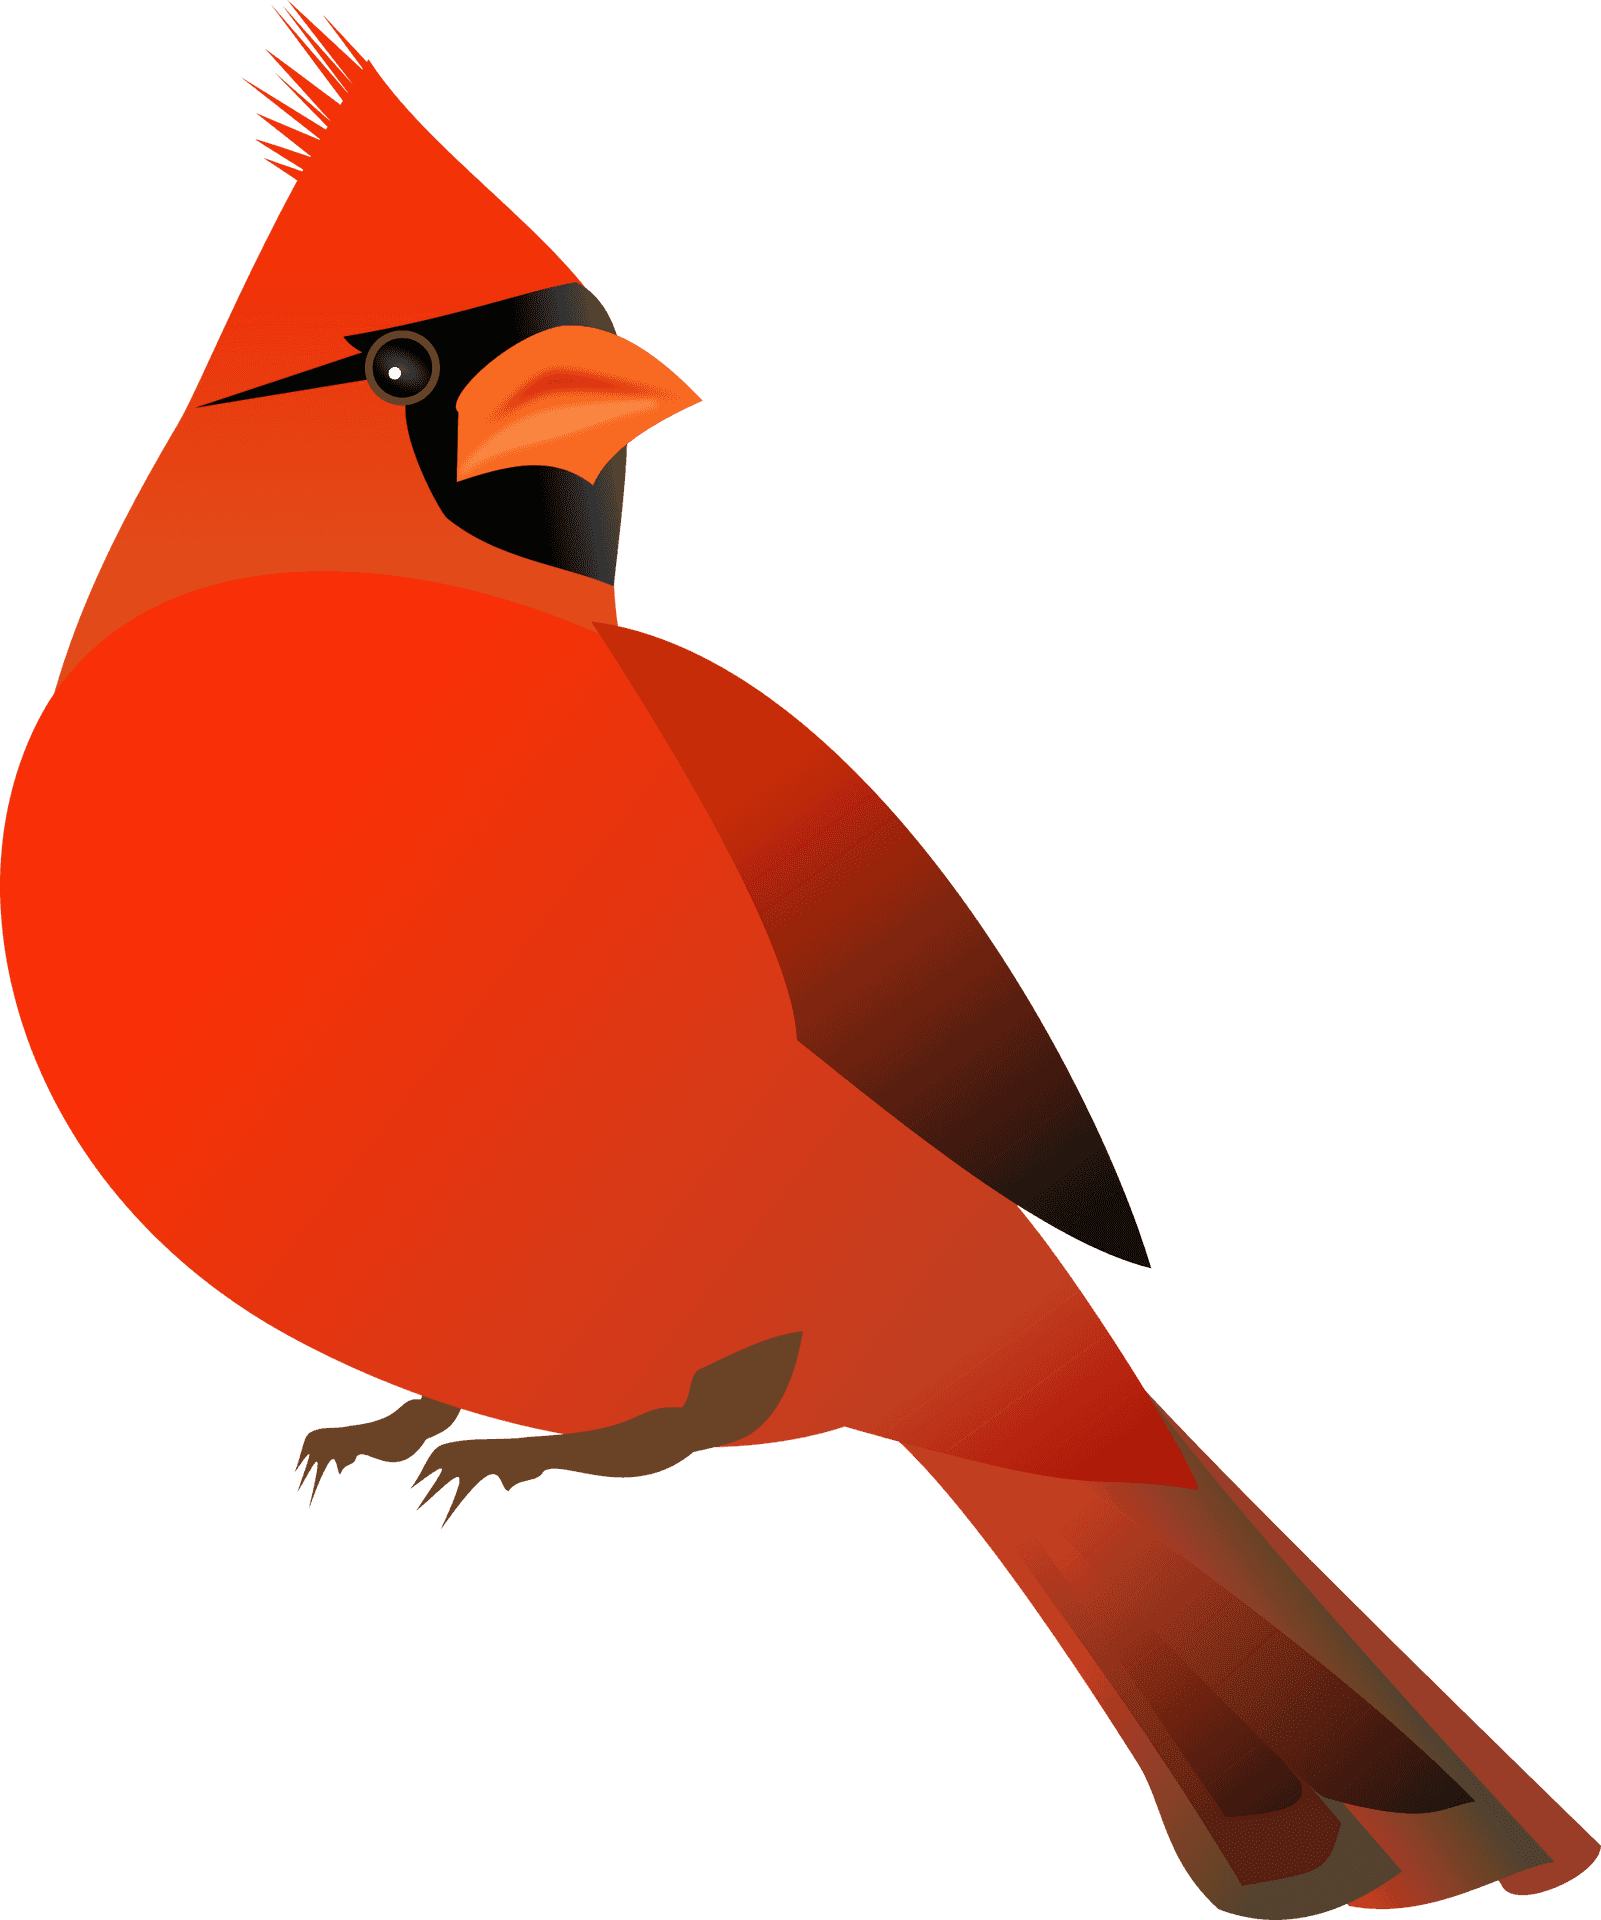 Vibrant Red Cardinal Illustration PNG